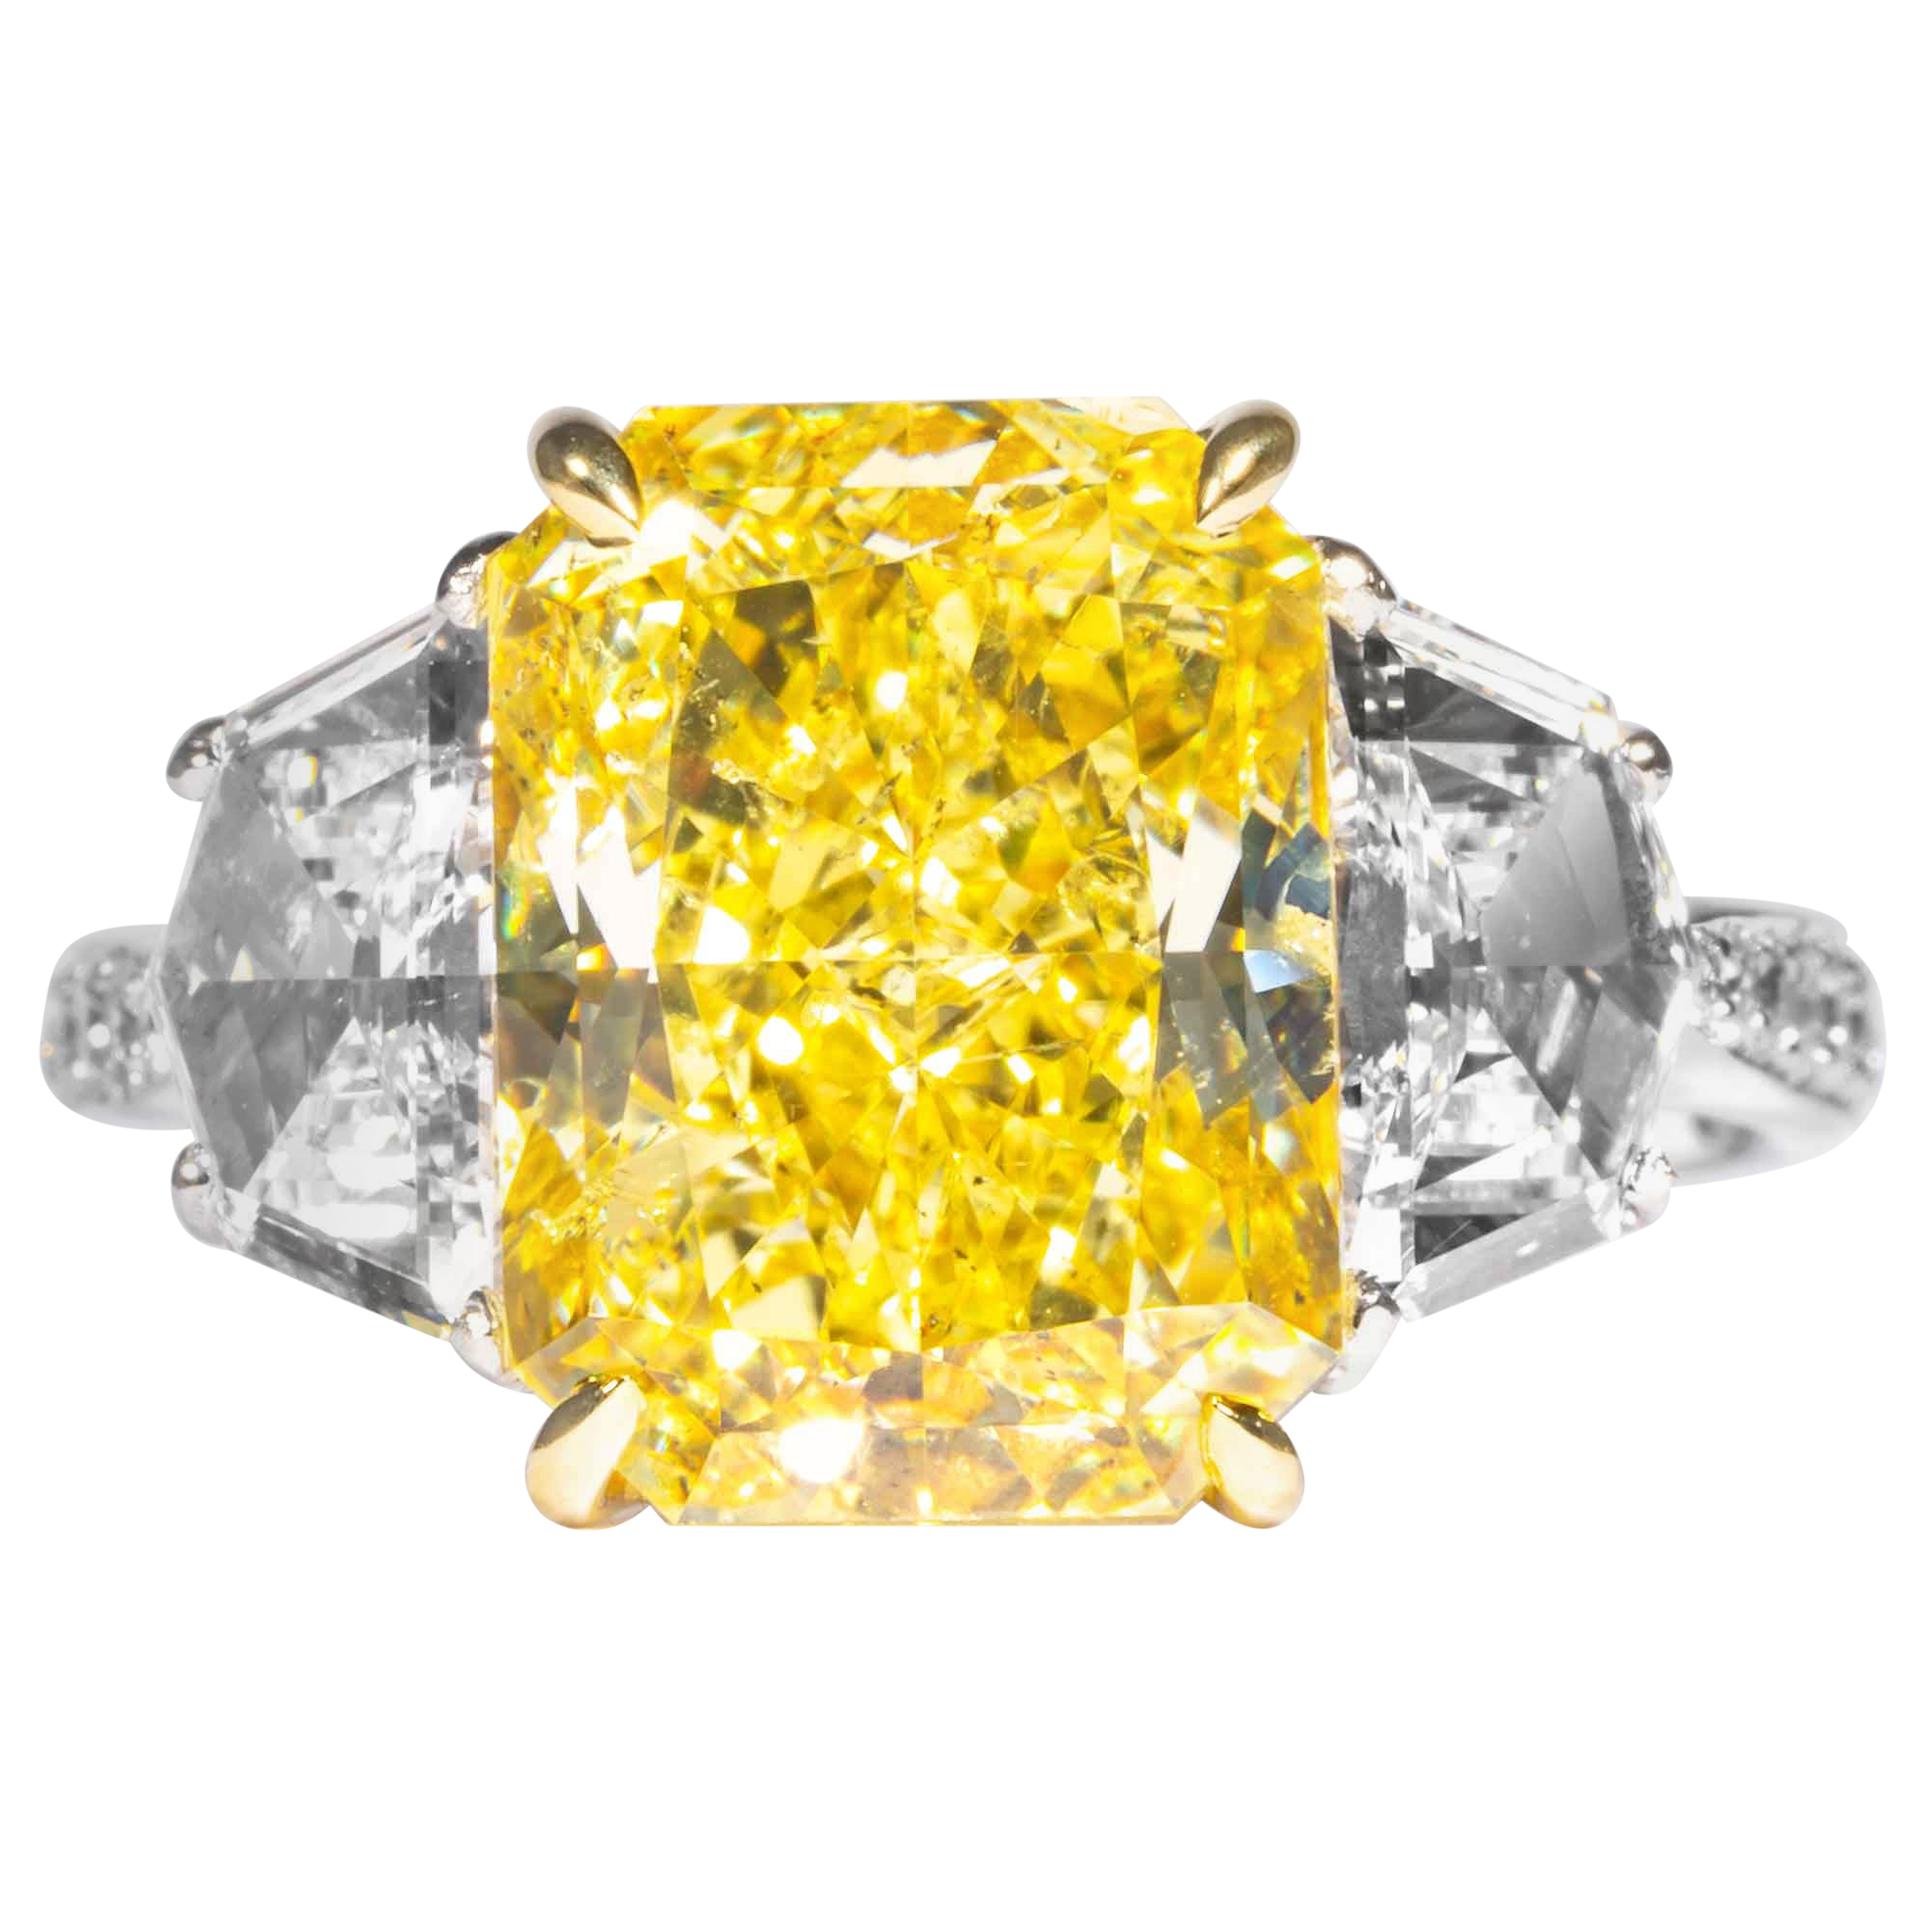 Shreve, Crump & Low GIA Certified 5.07 Carat Fancy Intense Yellow Diamond Ring For Sale